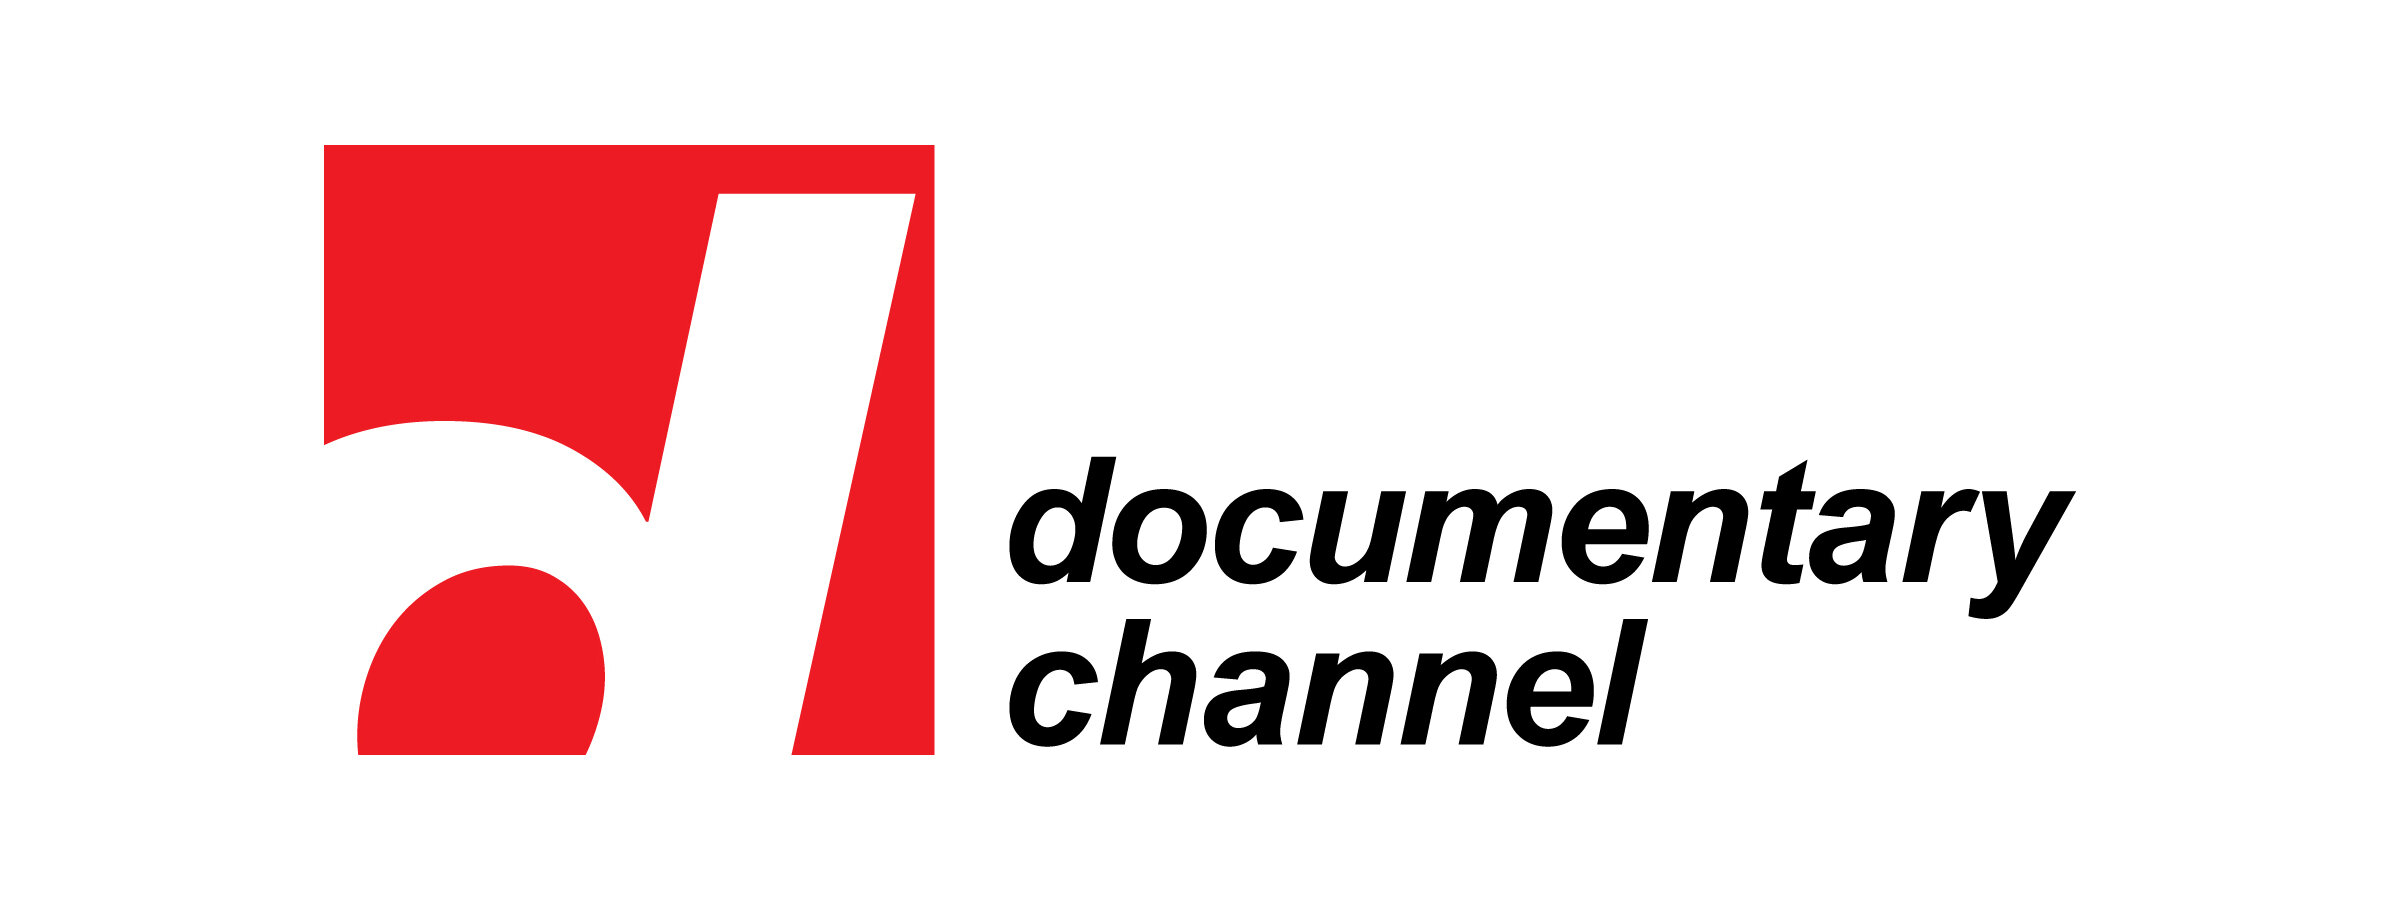 Do Channel HORIZONTAL logo - colour.jpg